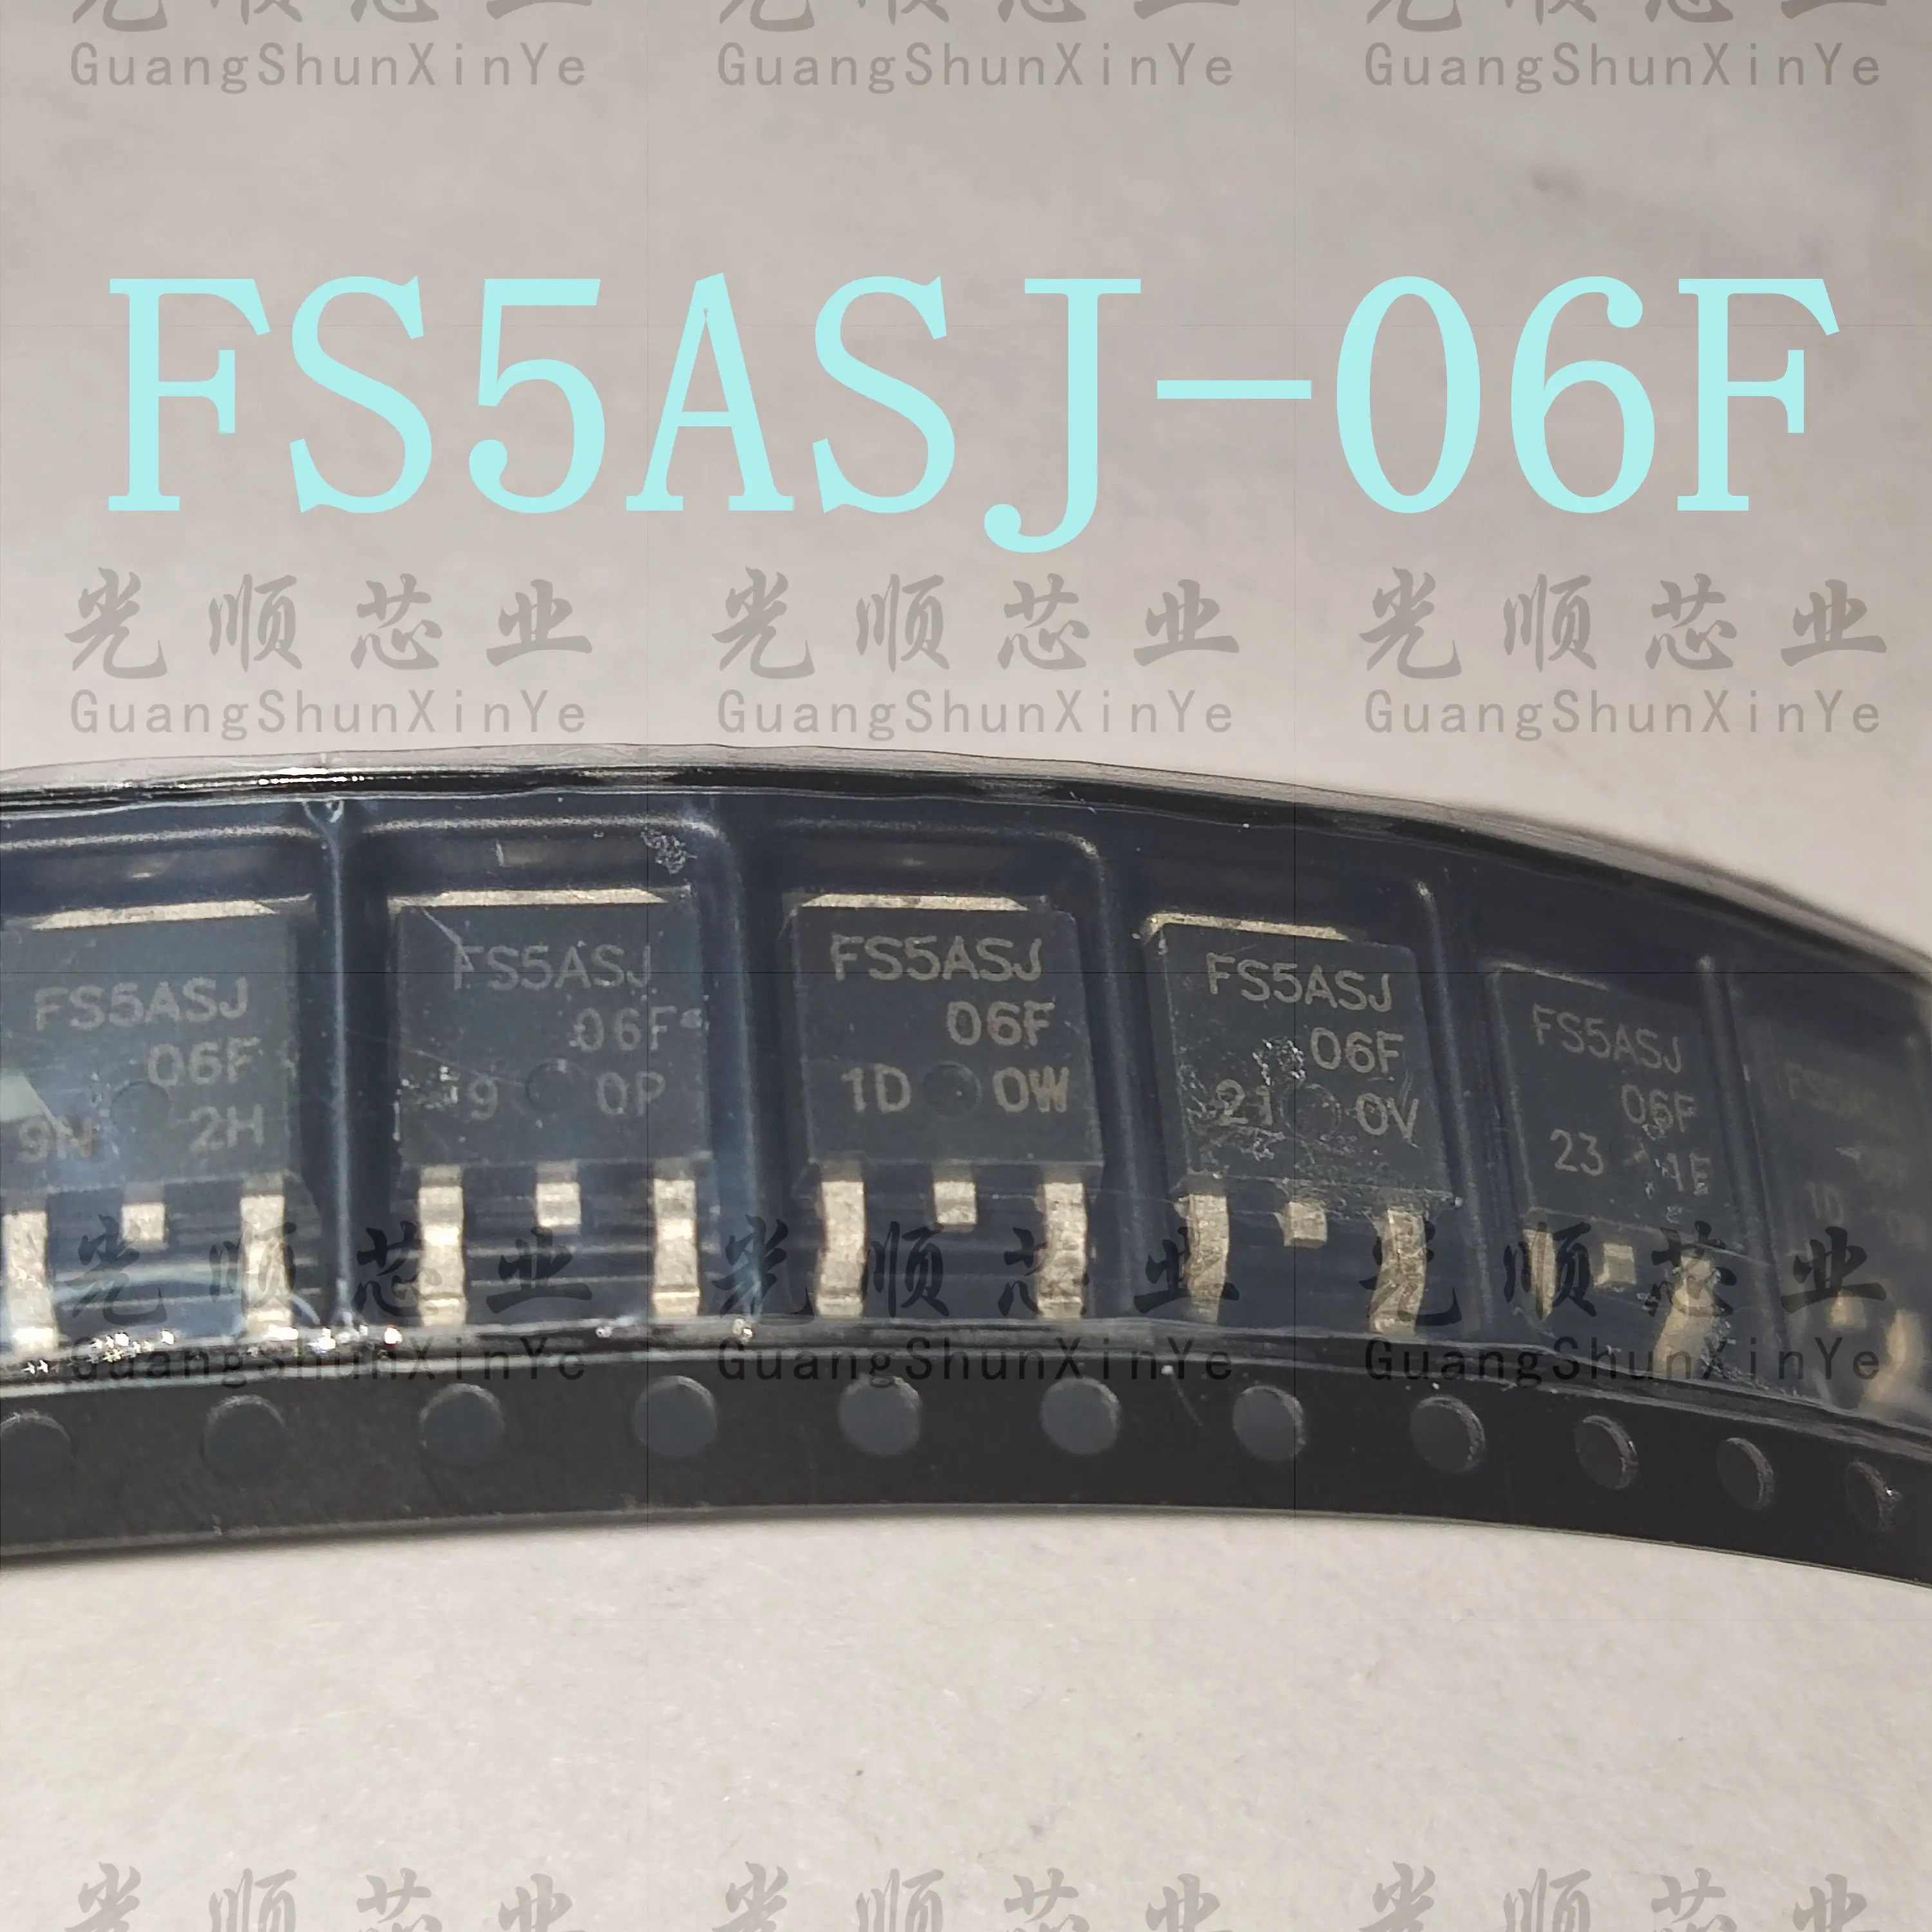 10ШТ FS5ASJ-06F-252 в наличии на складе.